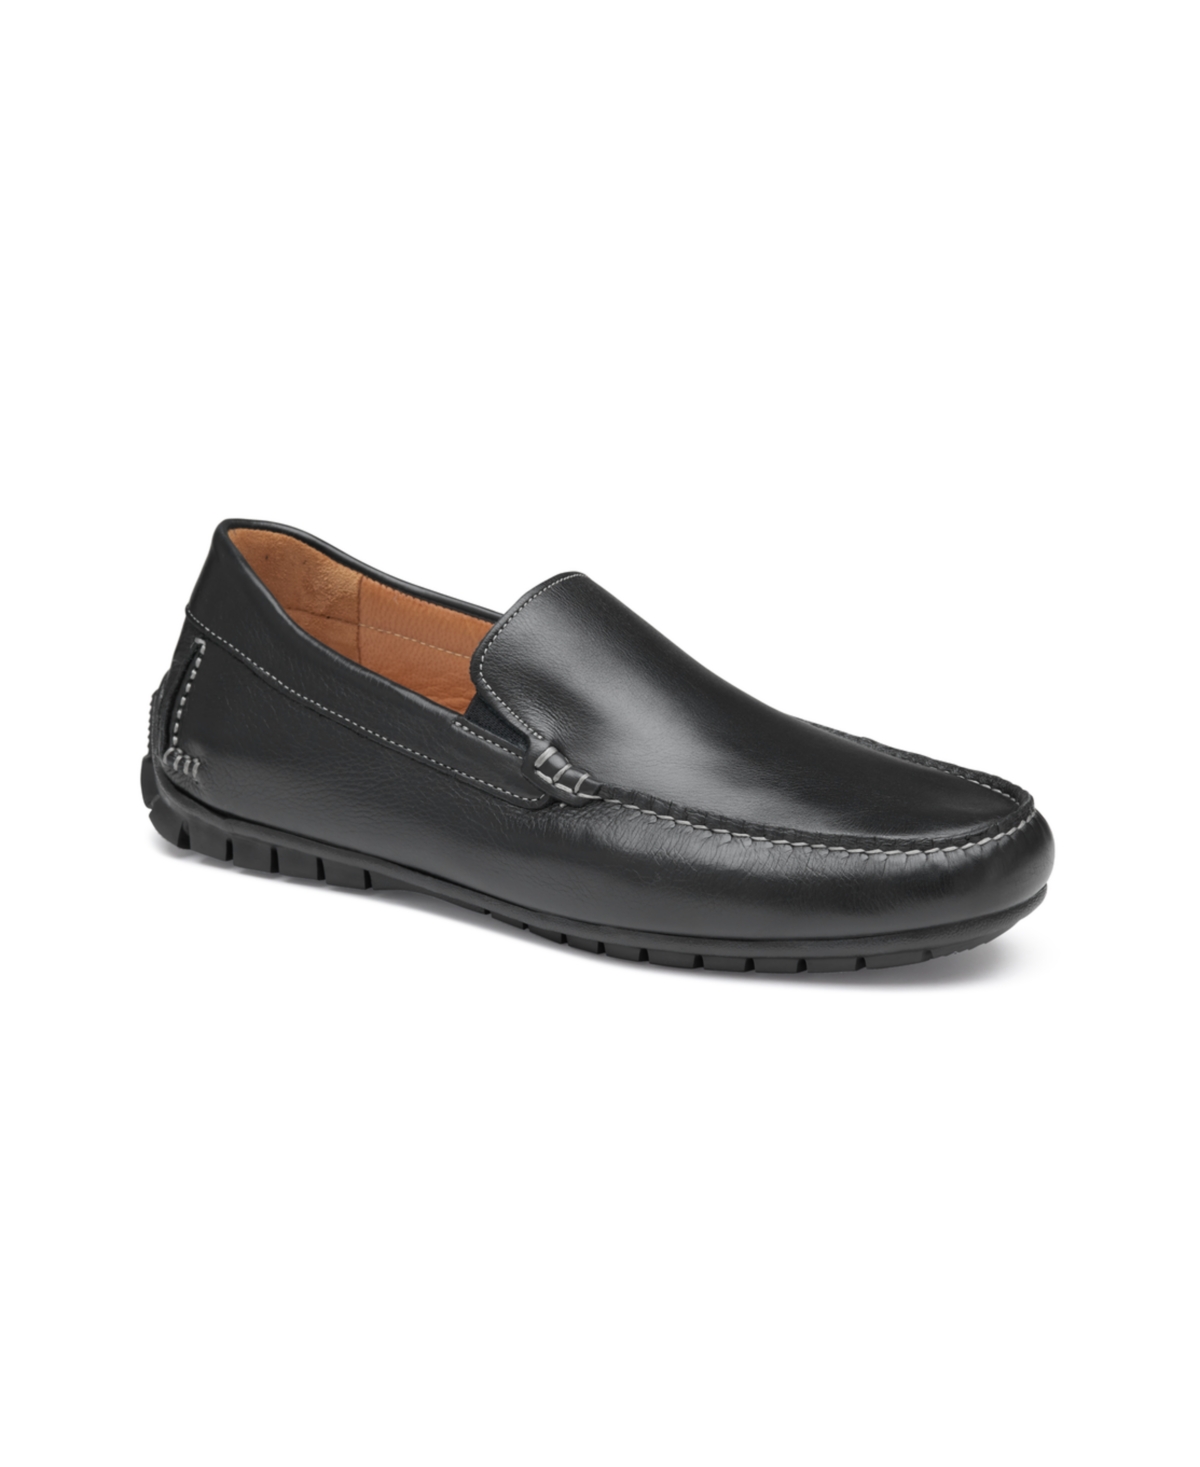 Men's Cort Moc Venetian Driving Loafers - Black